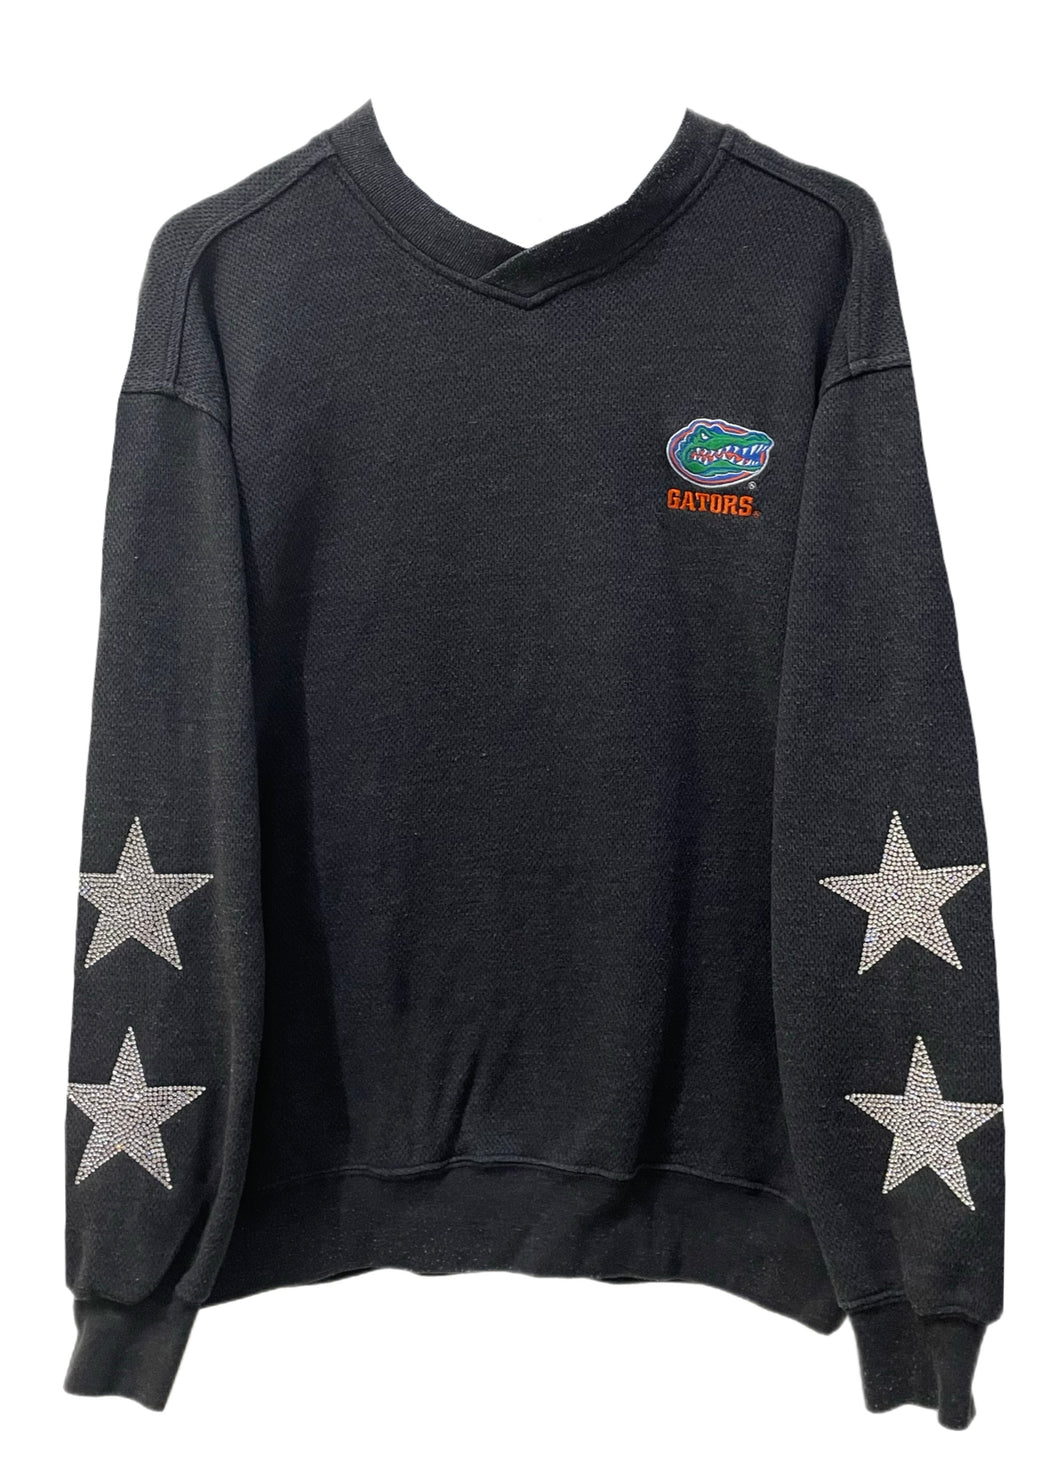 University of Florida, One of a KIND Vintage UF Gators Sweatshirt with Crystal Star Design